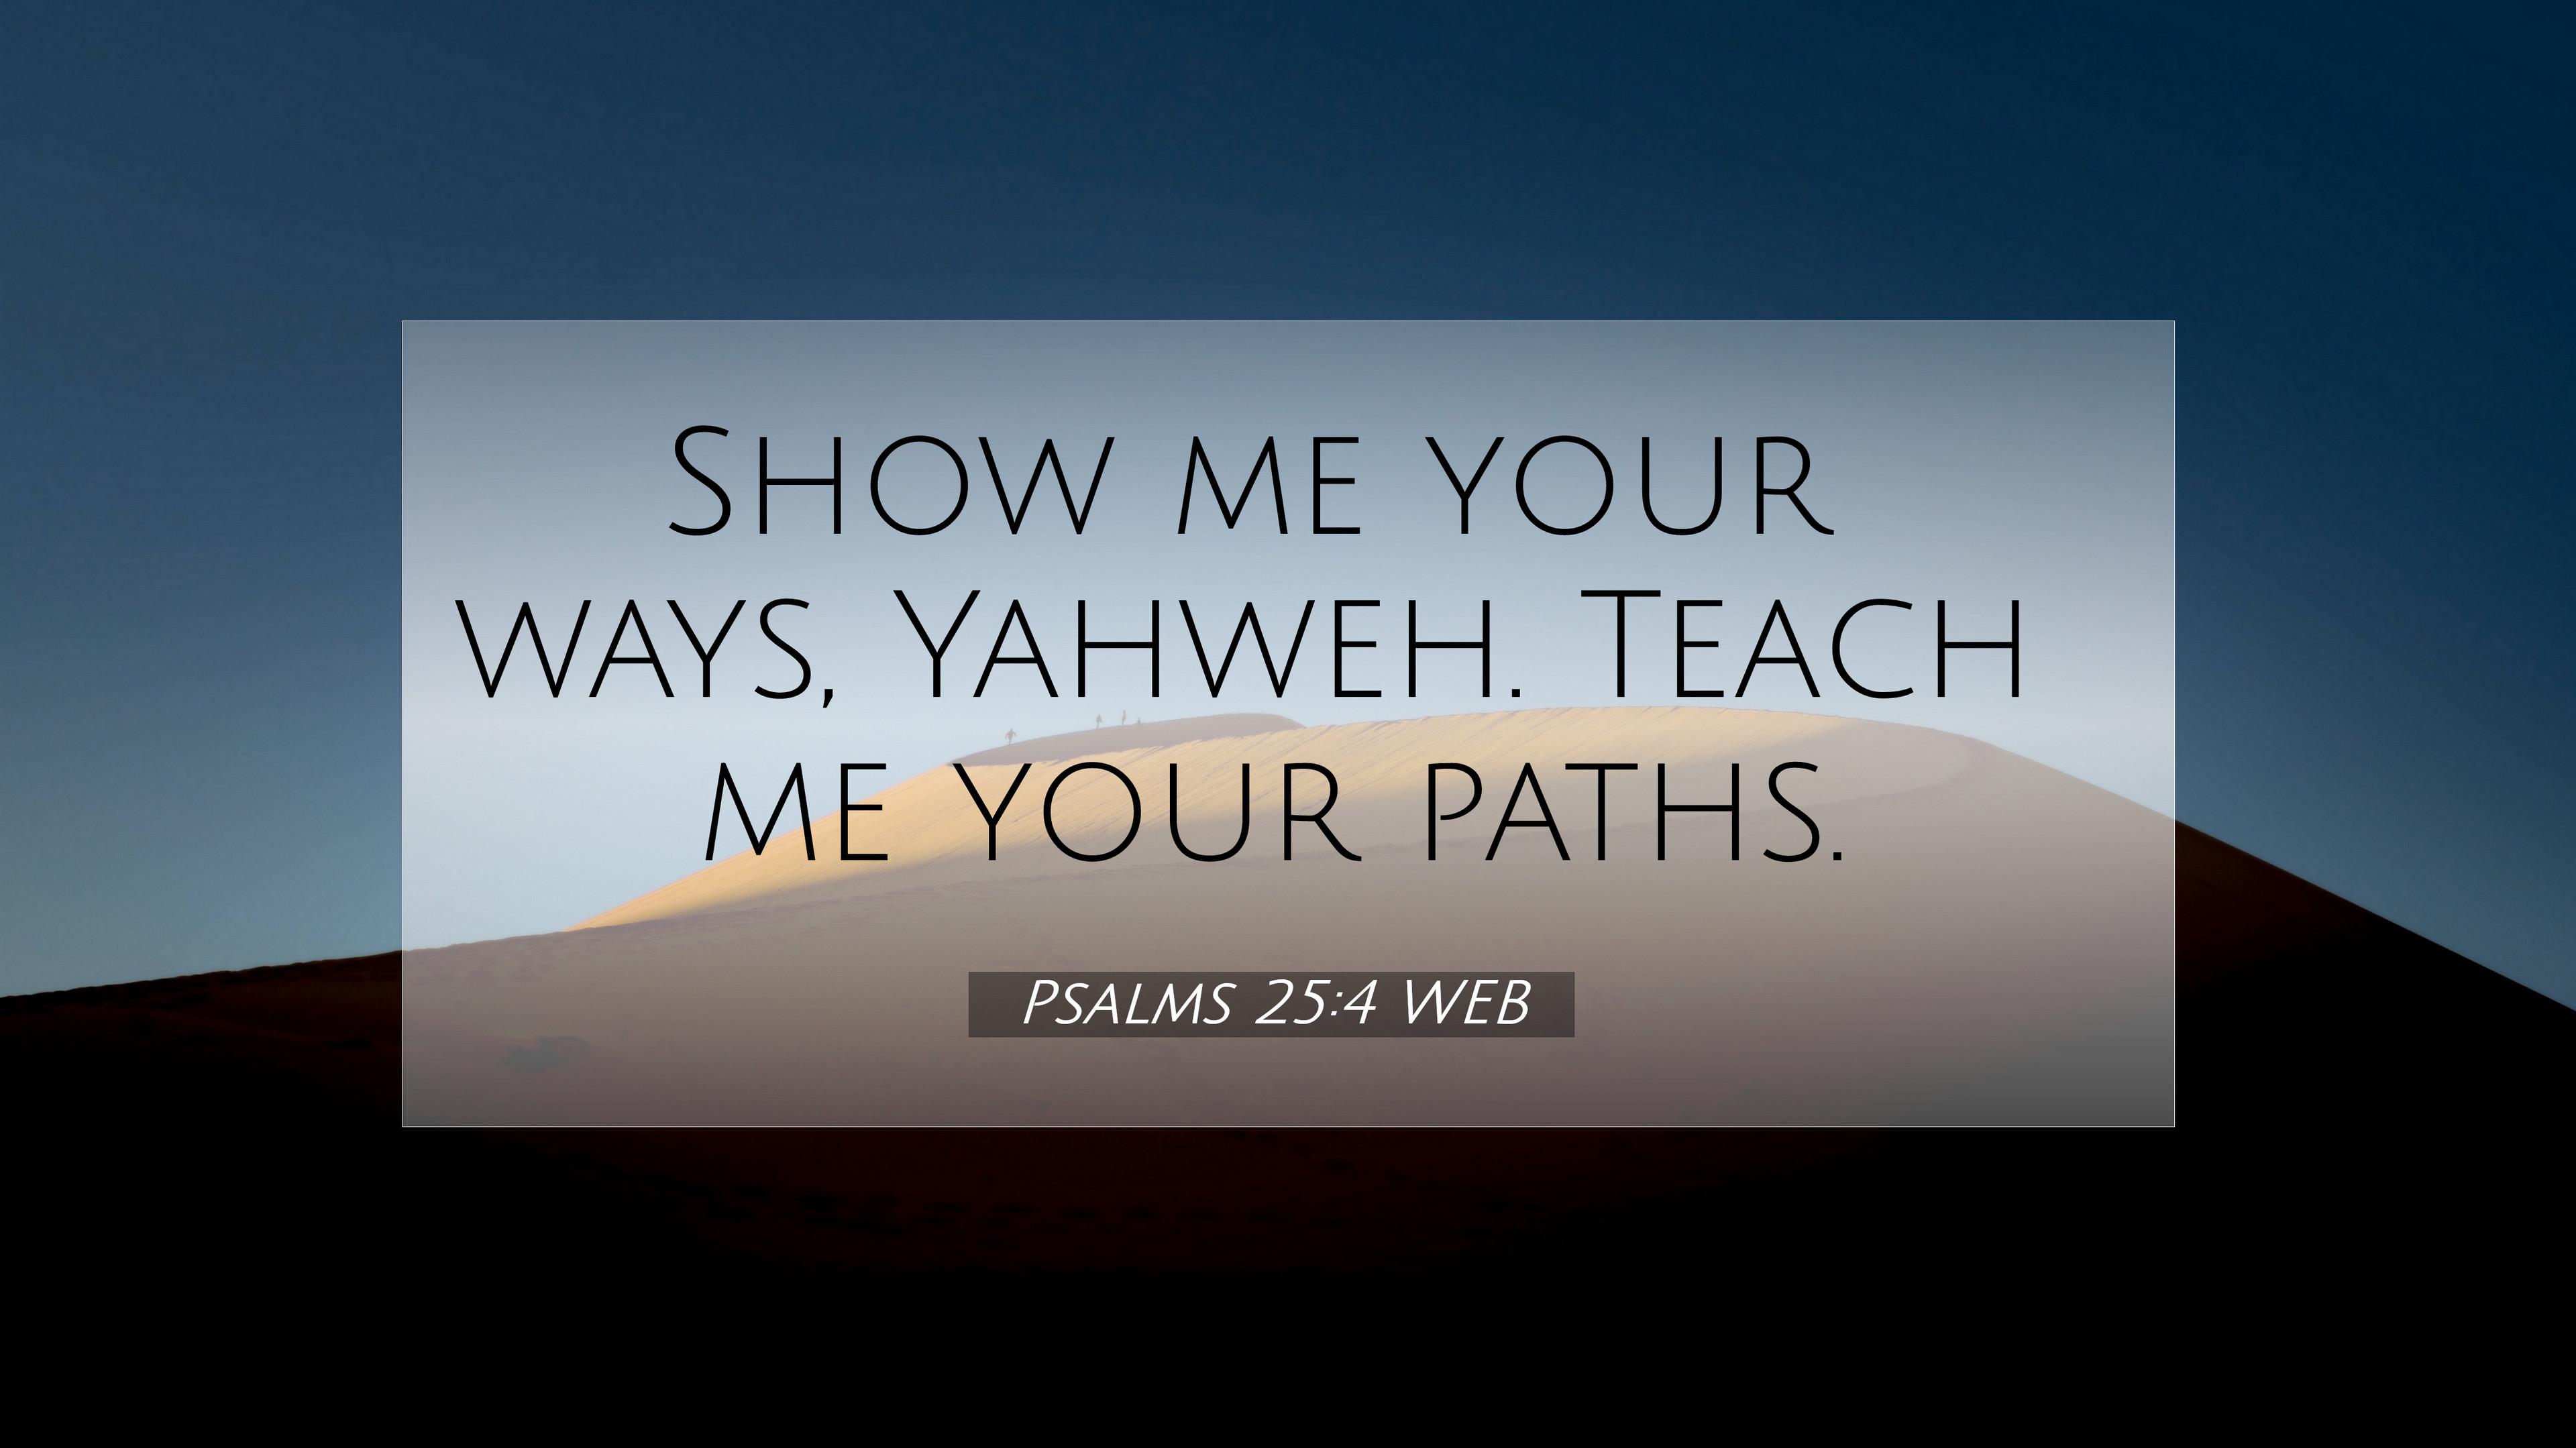 Psalms 254 WEB 4K Wallpaper   Show me your ways Yahweh Teach me